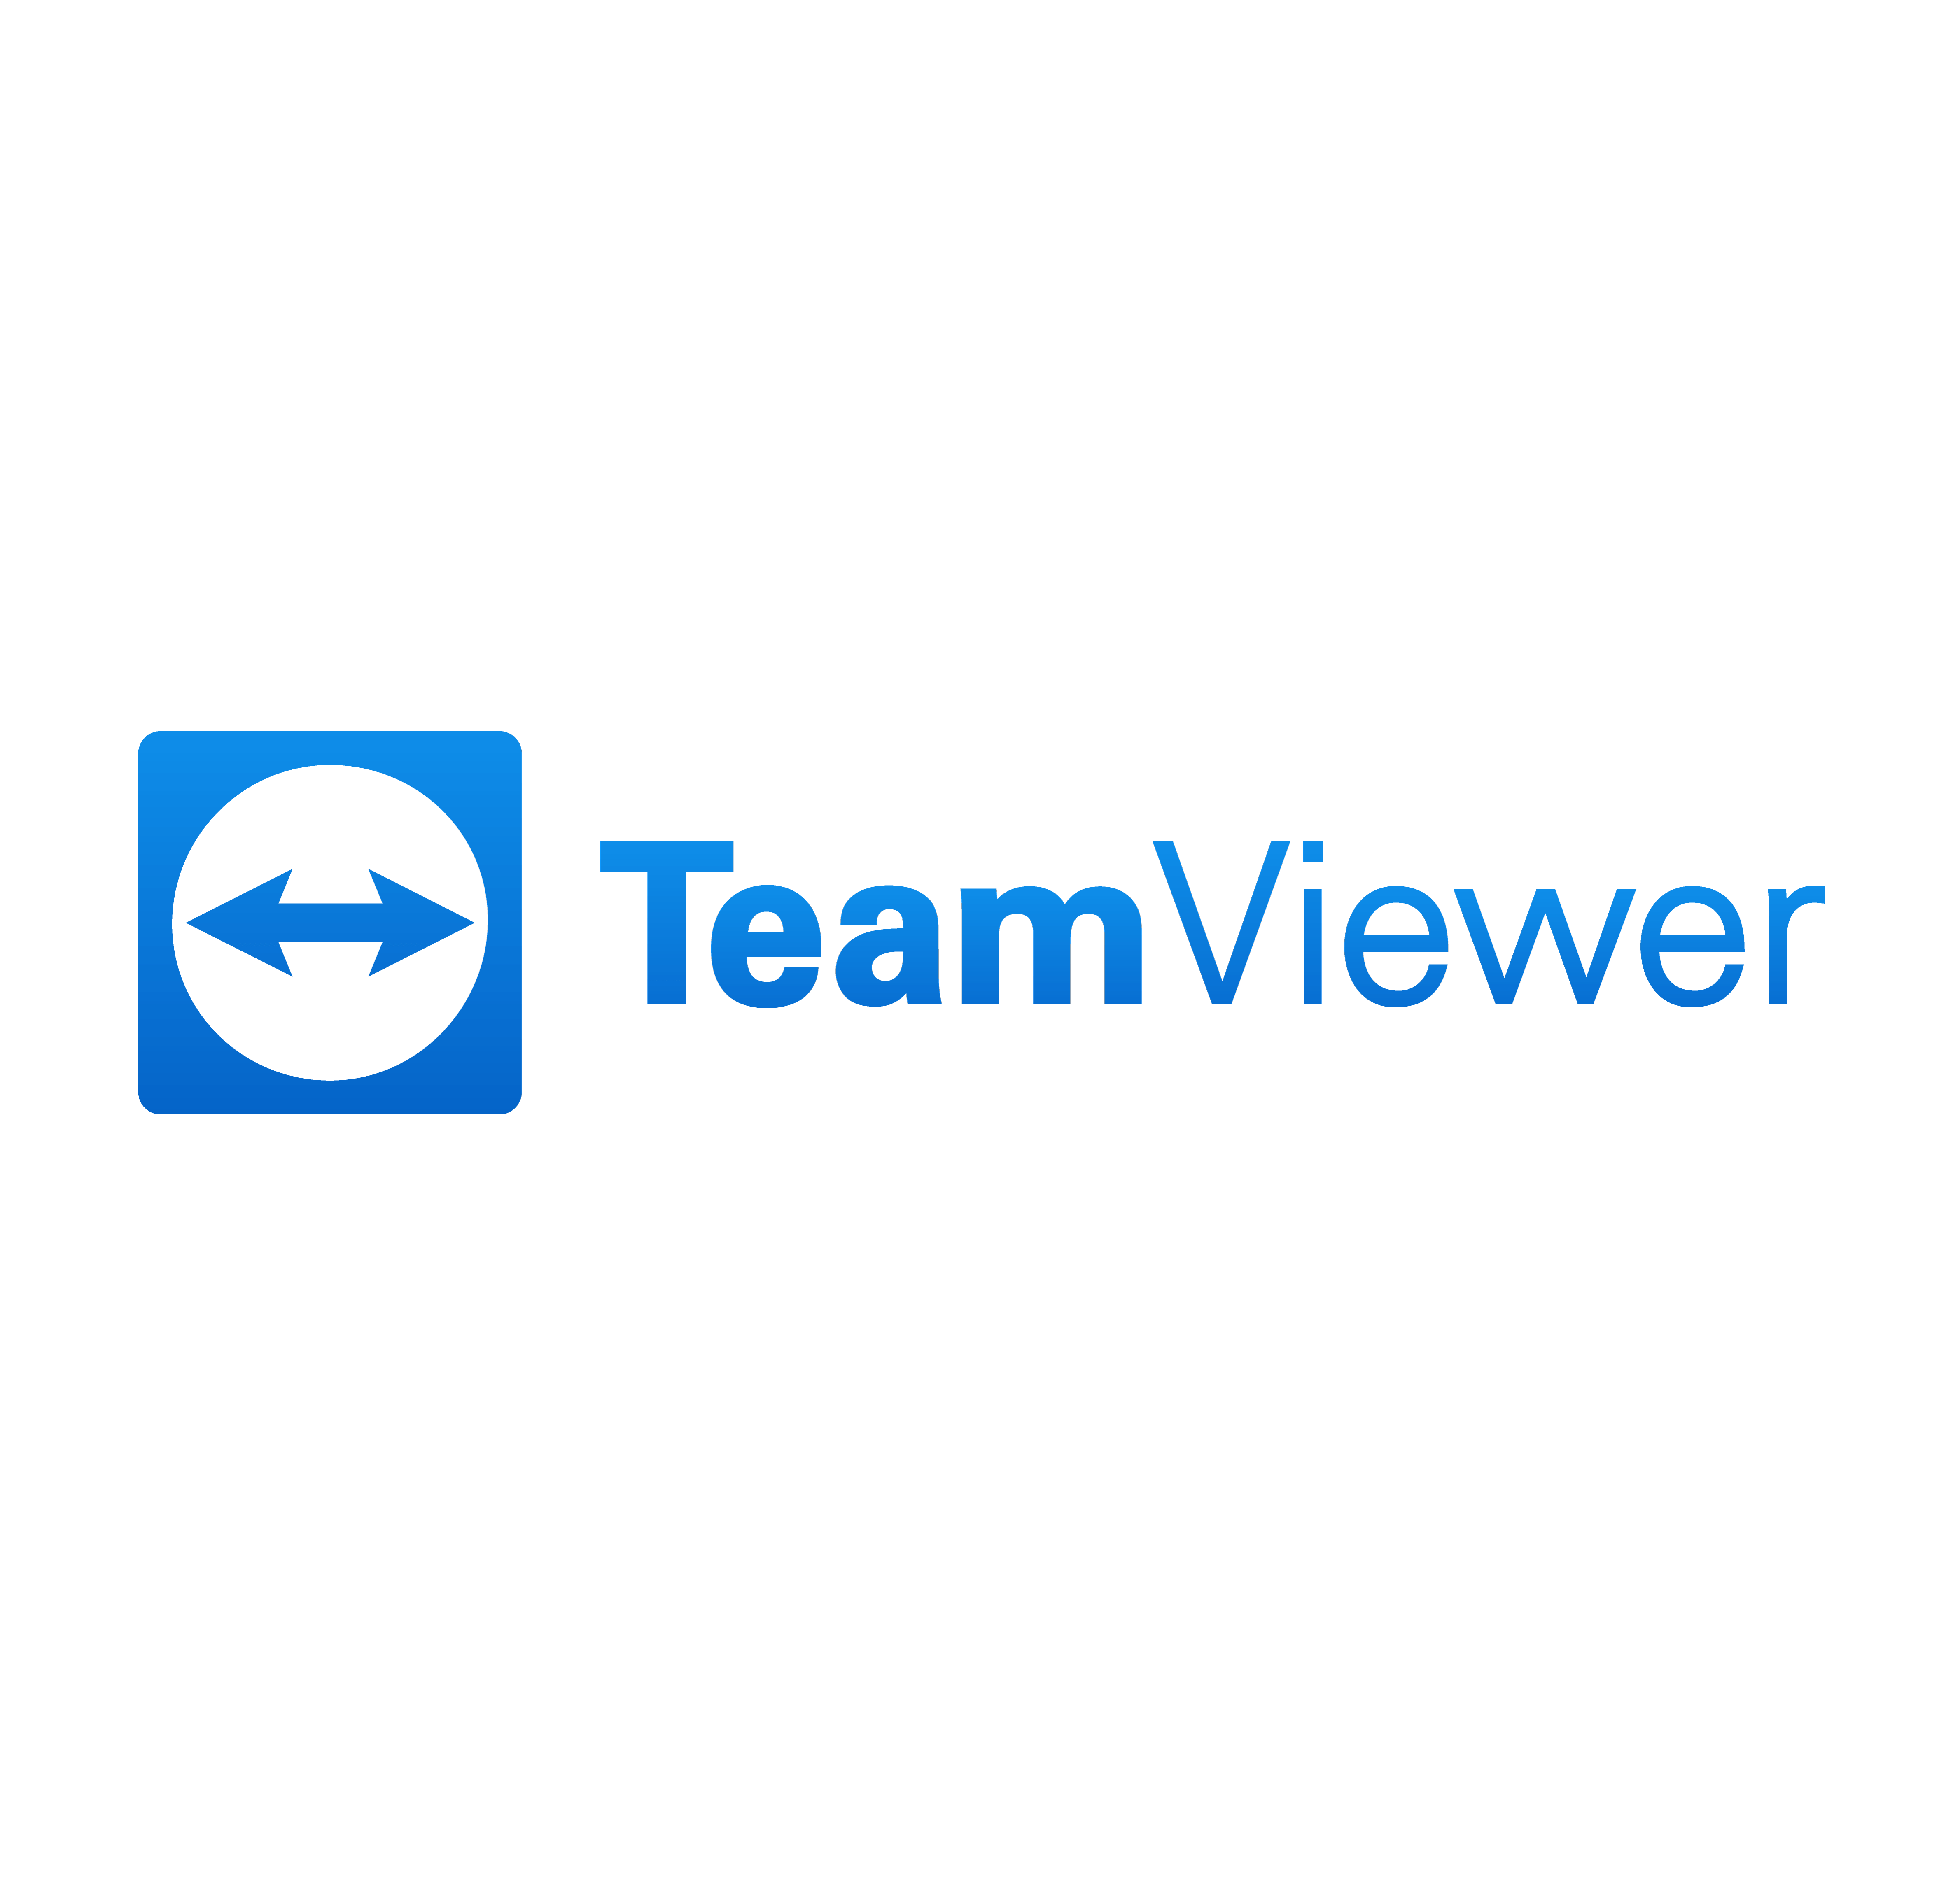 teamviewer logo